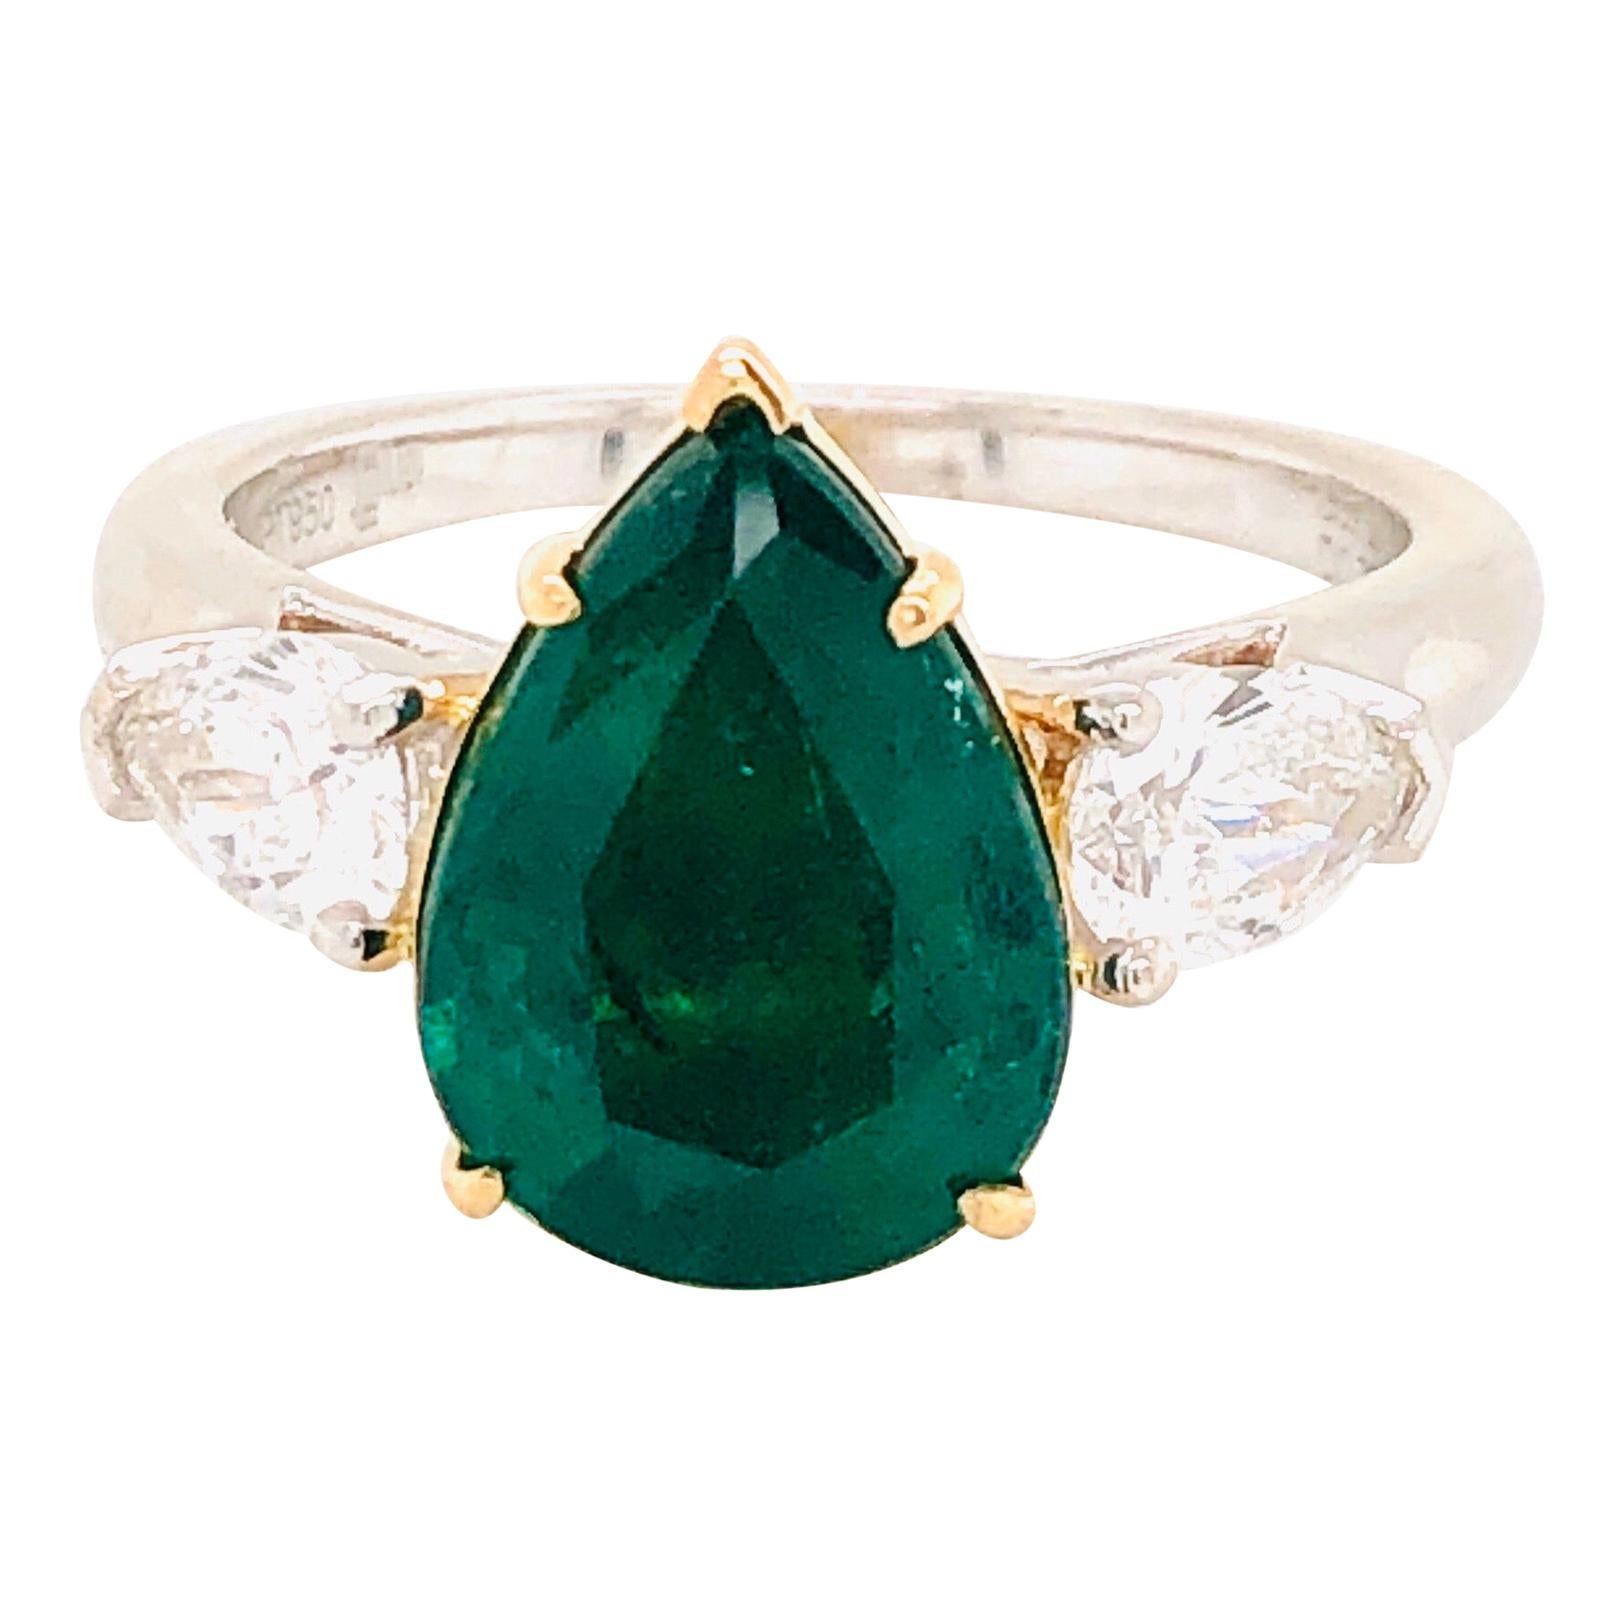 Emilio Jewelry Certified 3.85 Carat Vivid Green Emerald Diamond Ring